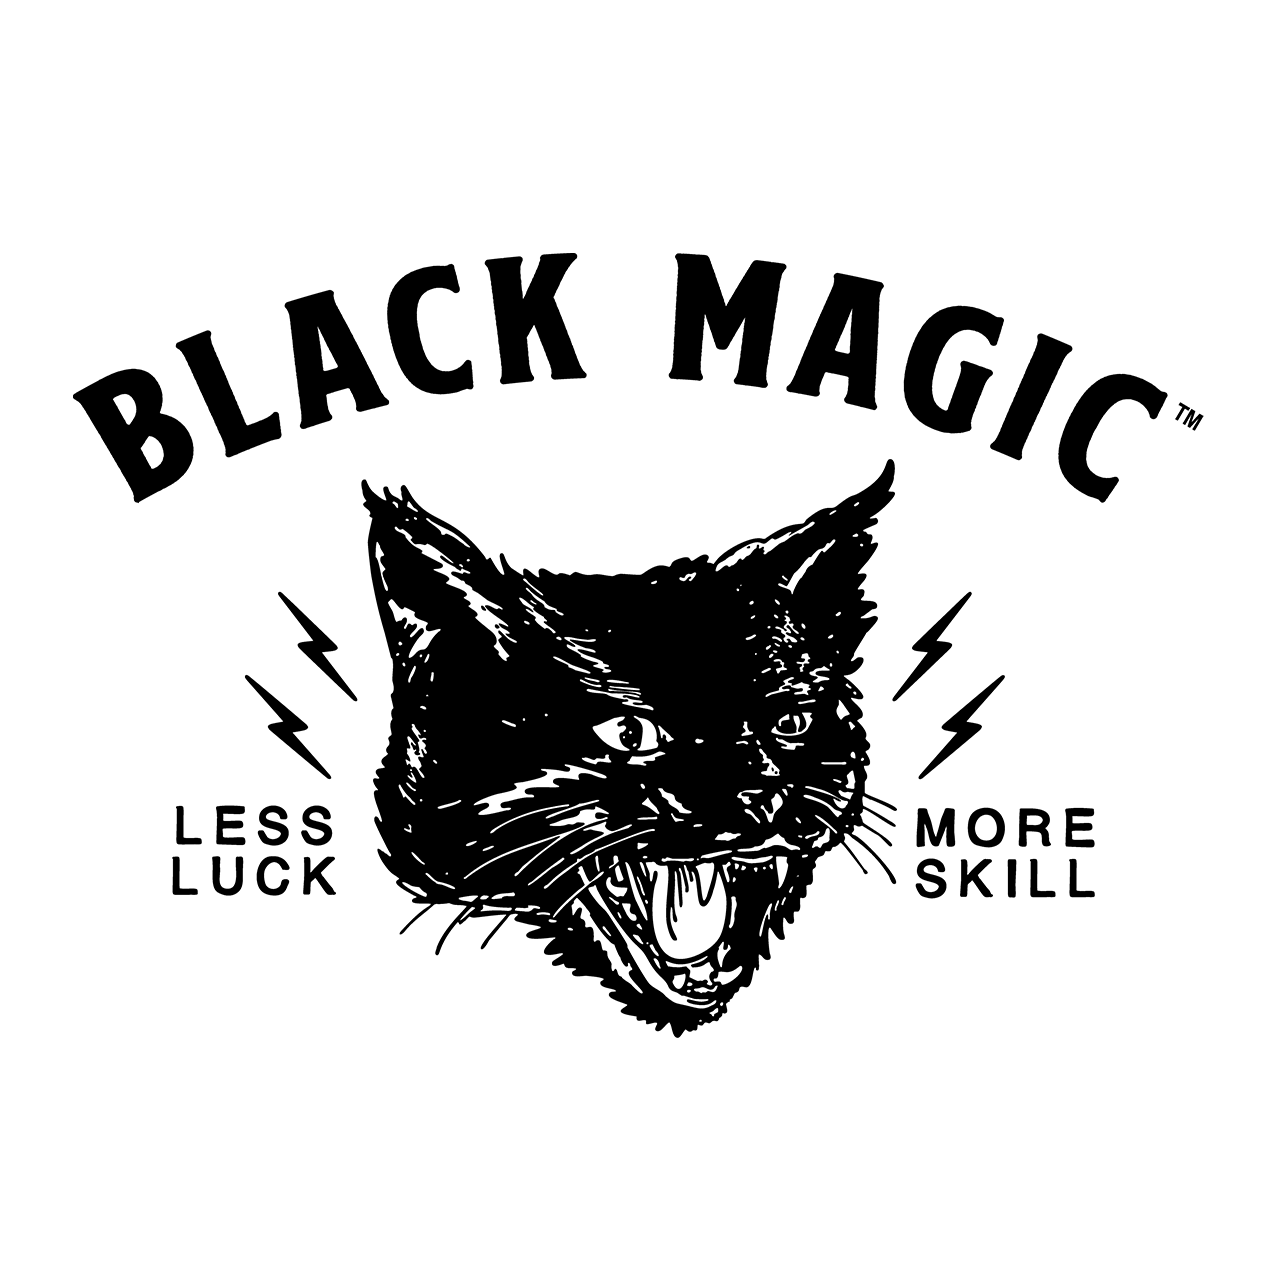 Black Magic Supply Shaker Cup